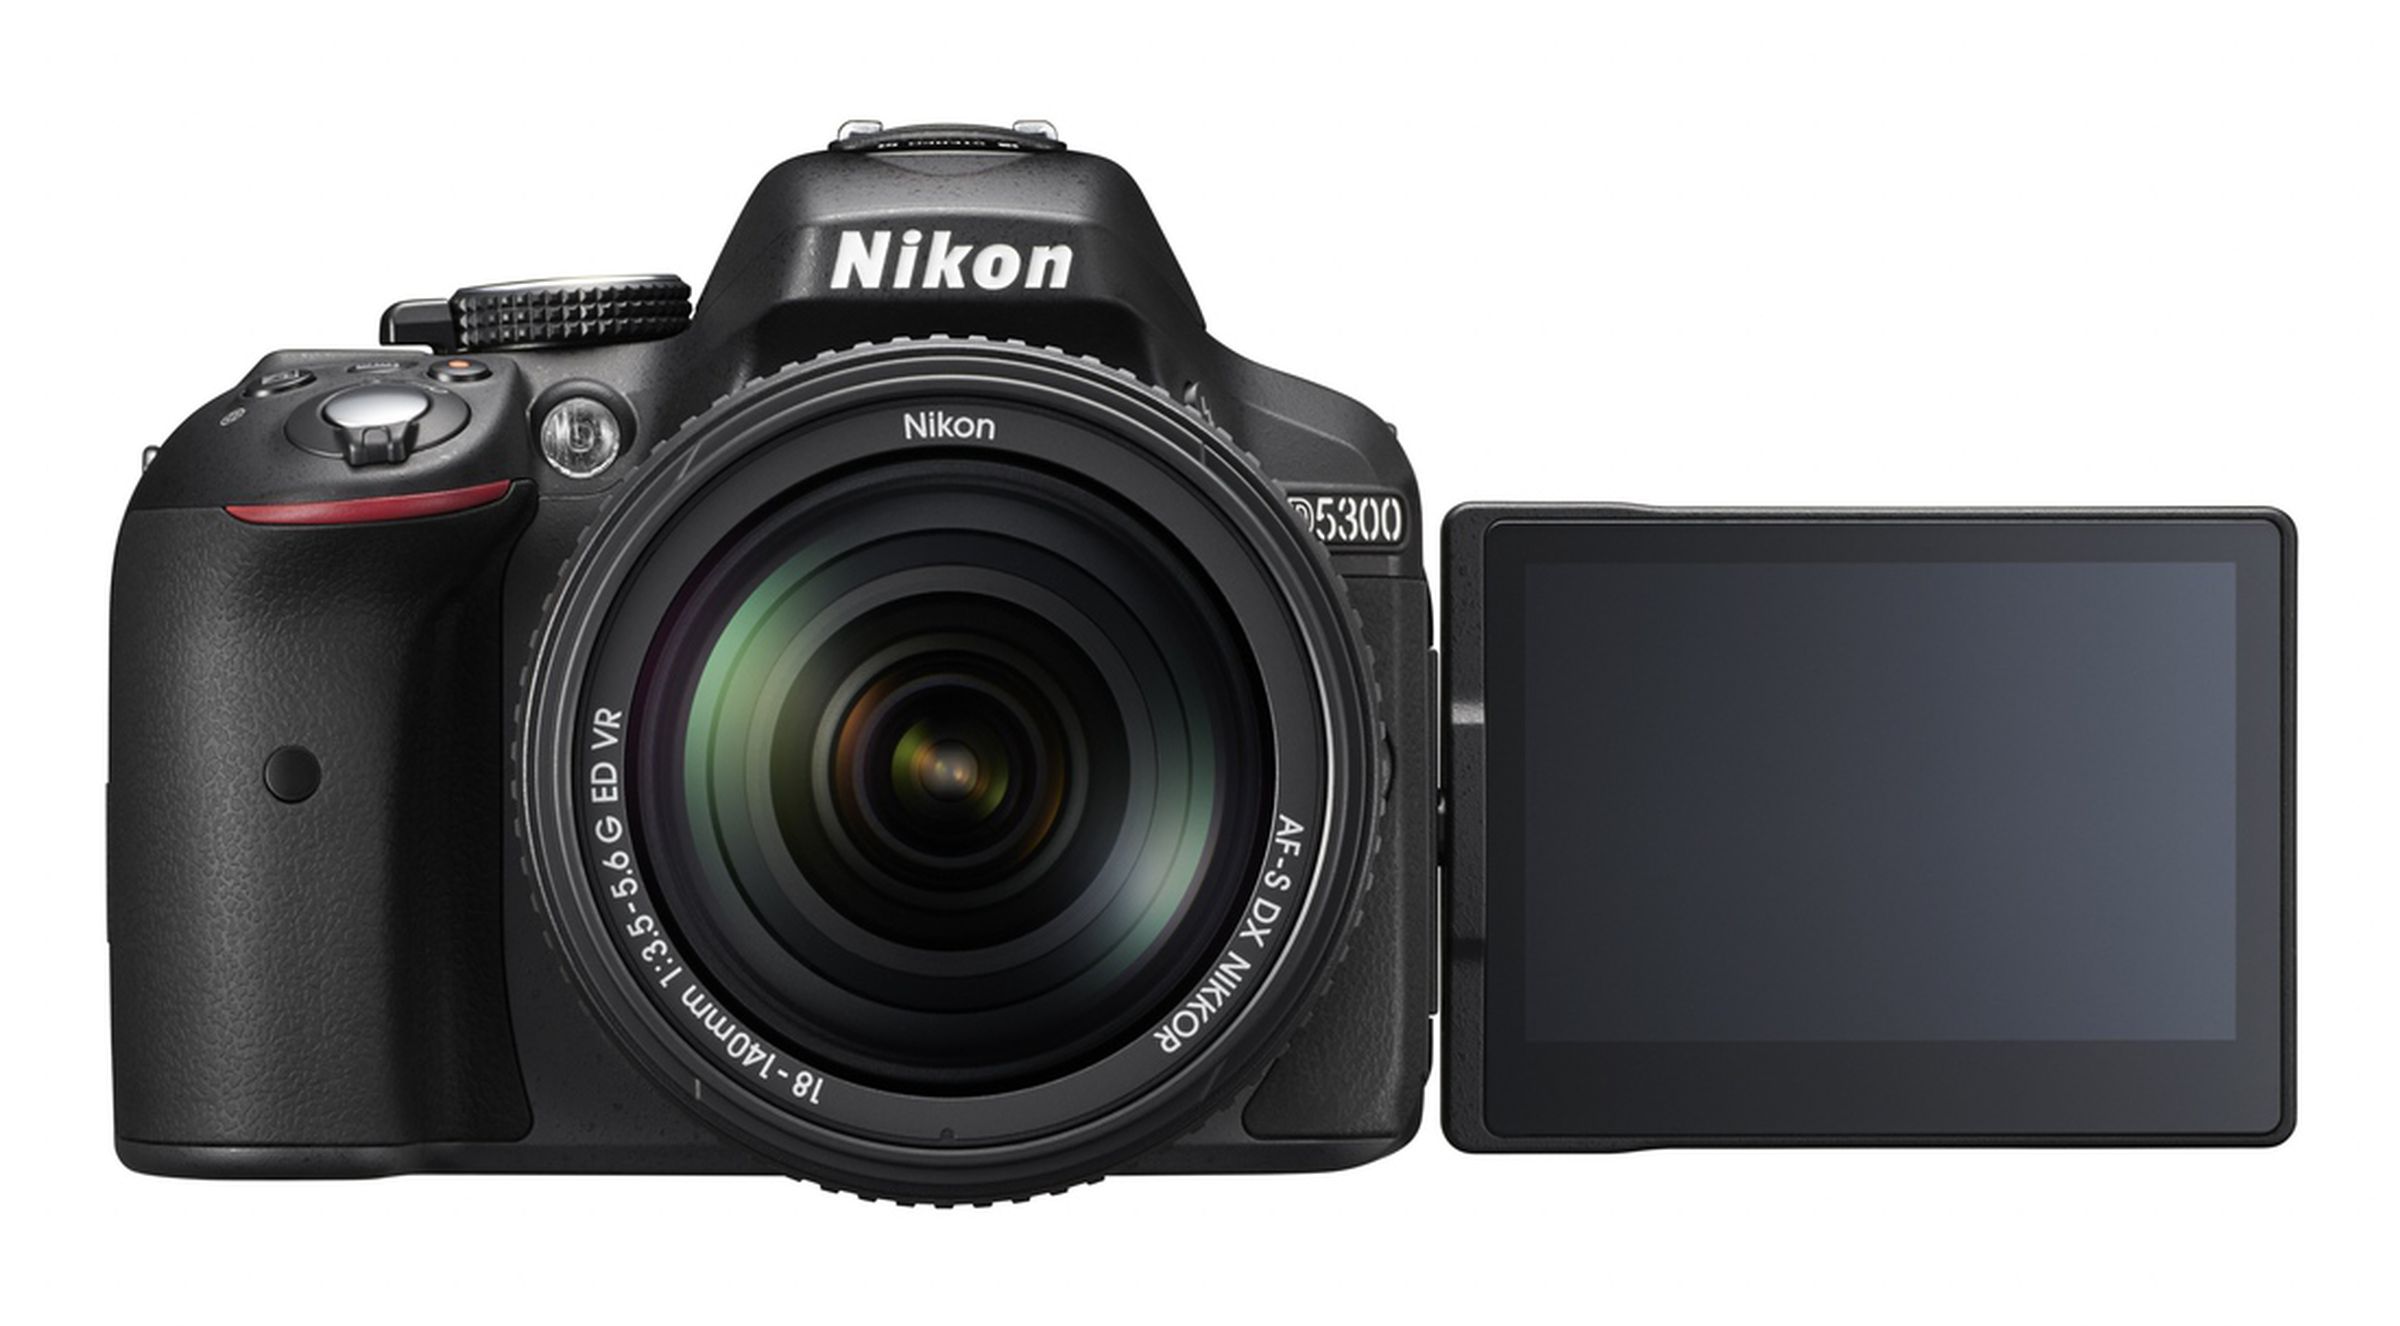 Nikon D5300 DSLR press images